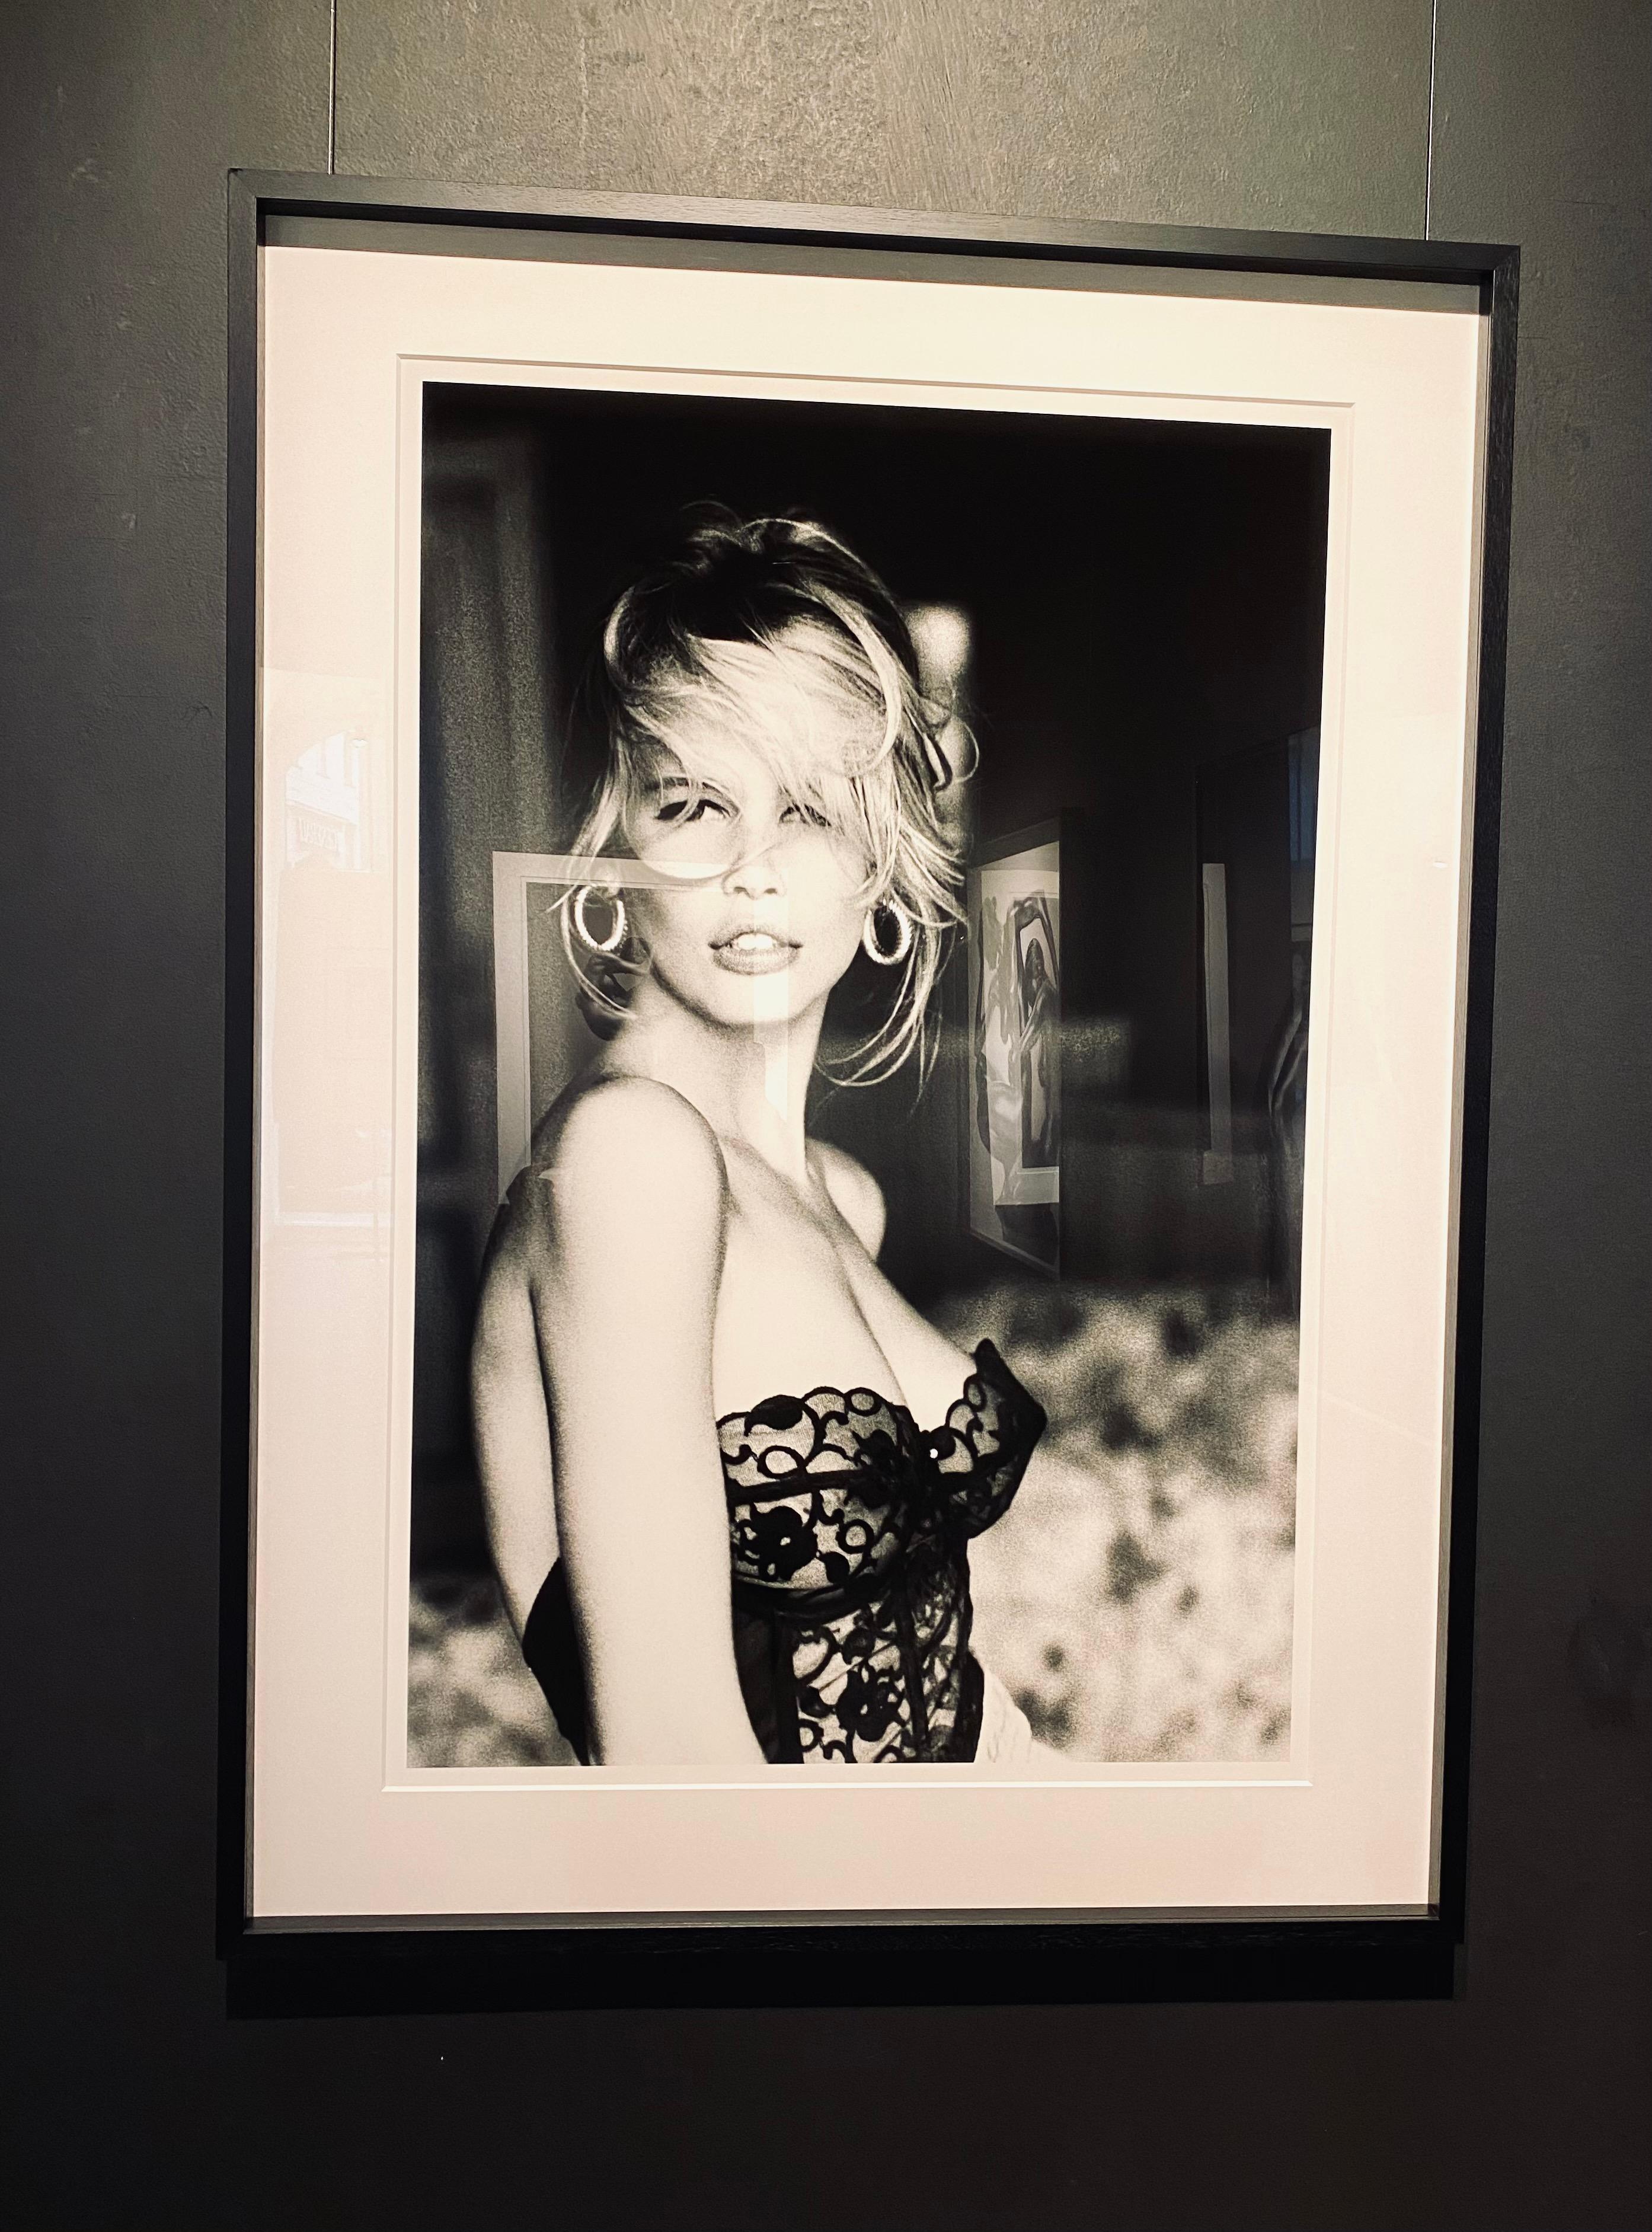 Claudia Schiffer - portrait of the supermodel looking like Brigitte Bardot - Photograph by Ellen von Unwerth